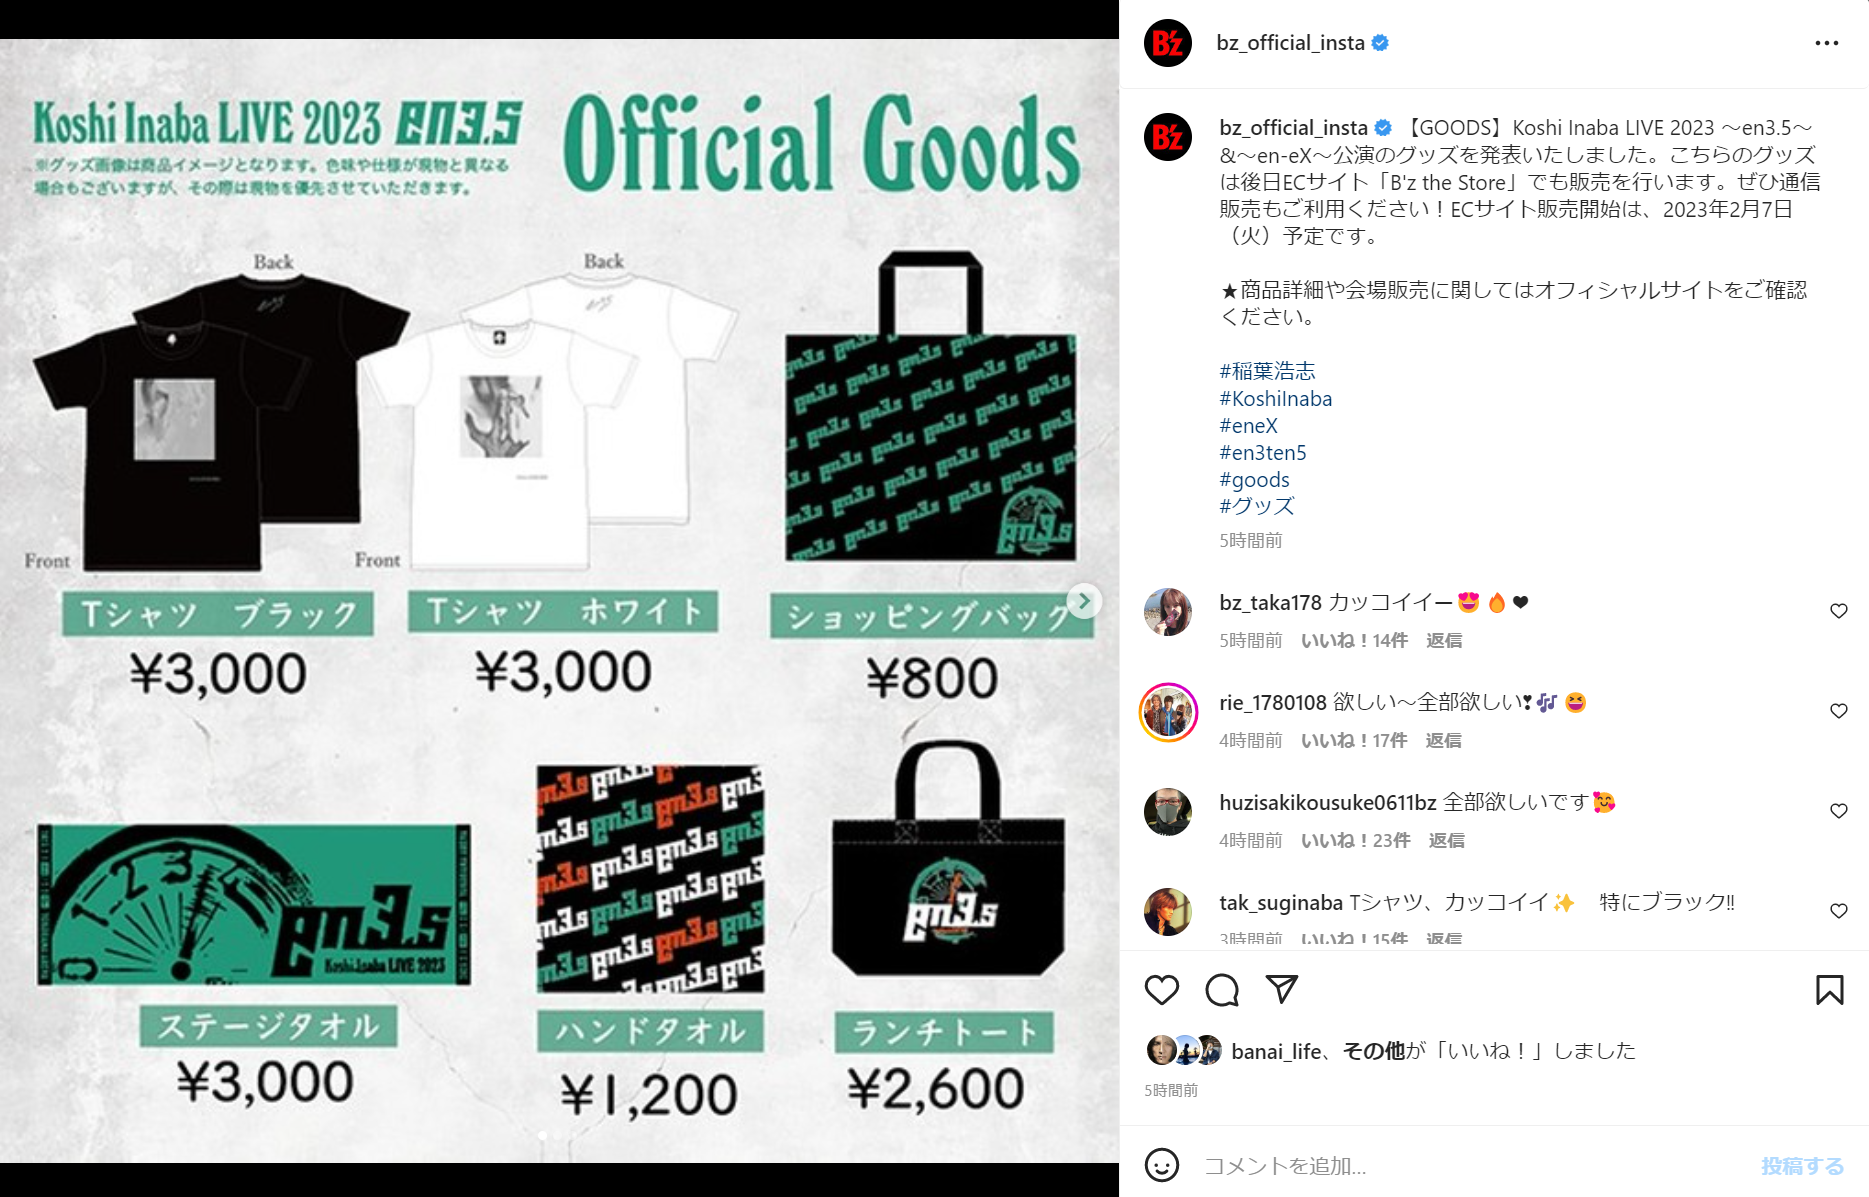 『Koshi Inaba LIVE 2023 〜en3.5〜』のグッズ販売を知らせる公式Instagramの投稿